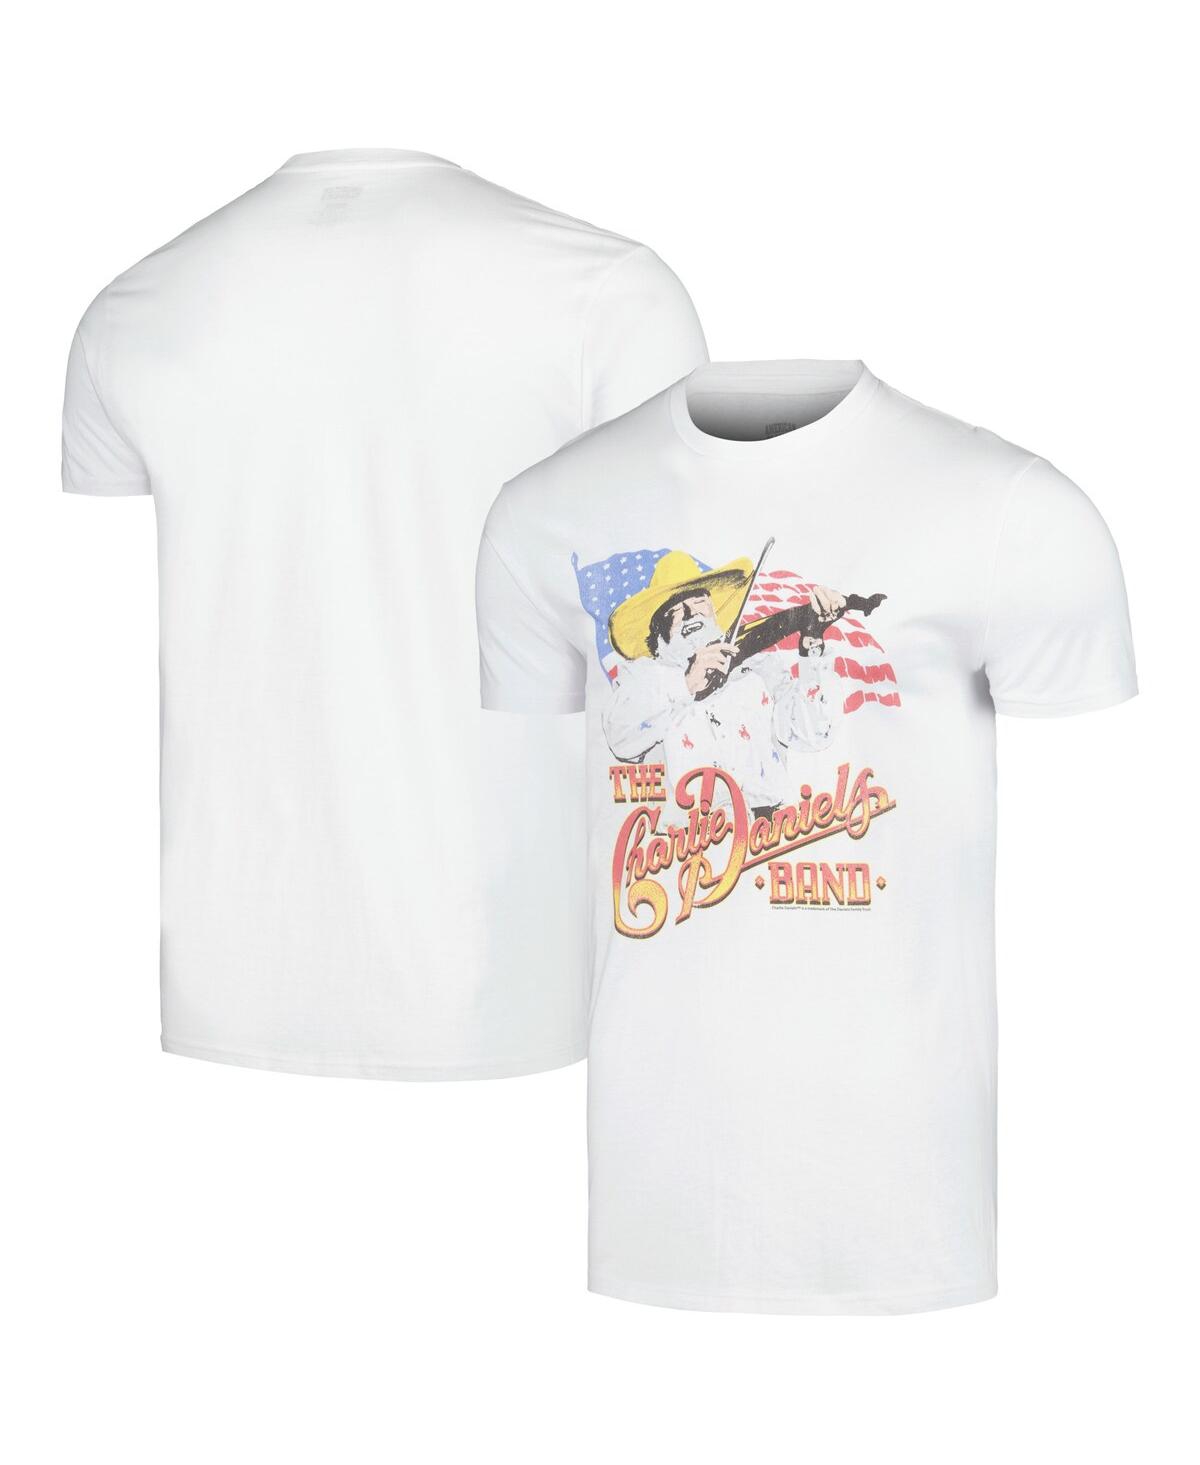 Men's White The Charlie Daniels Band Cdb and the Flag Graphic T-shirt - White